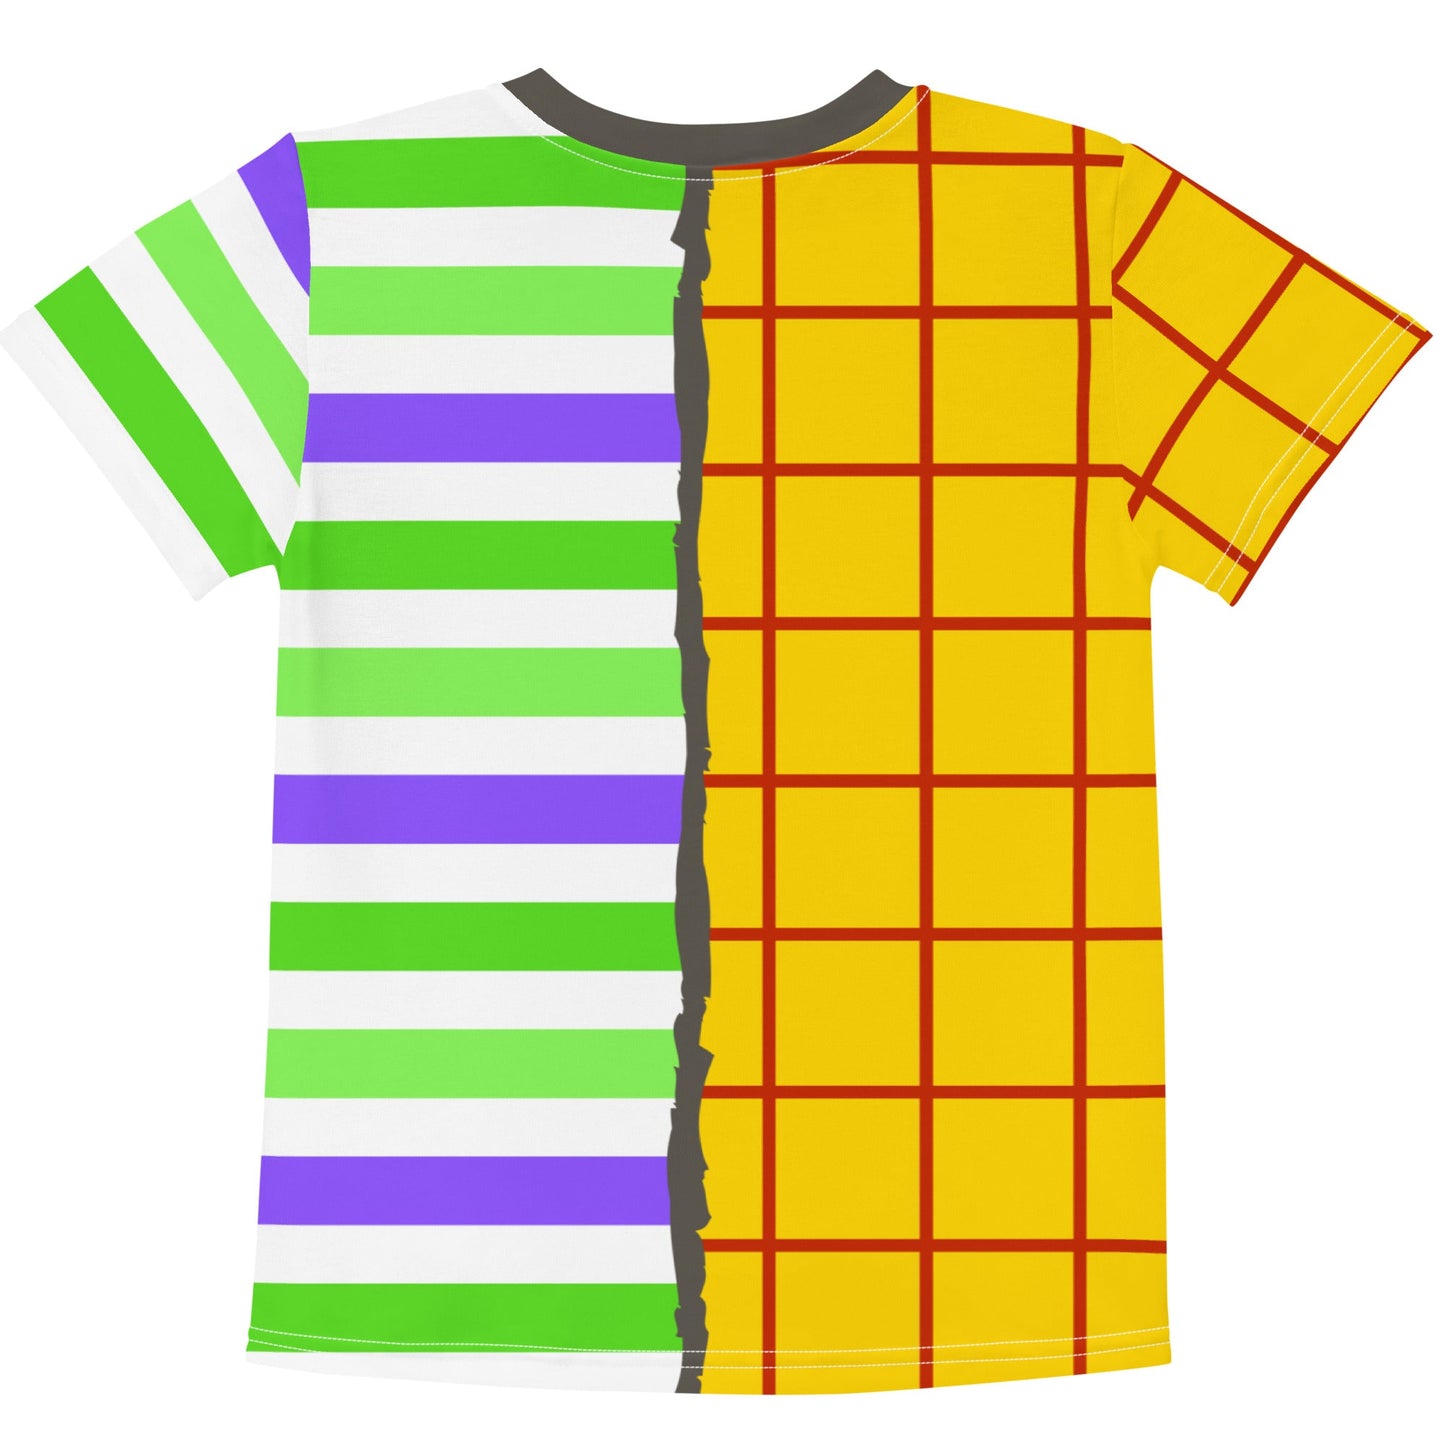 Andy's Room Kids crew neck t-shirt buzz lightyeardisney adultdisney bounding#tag4##tag5##tag6#